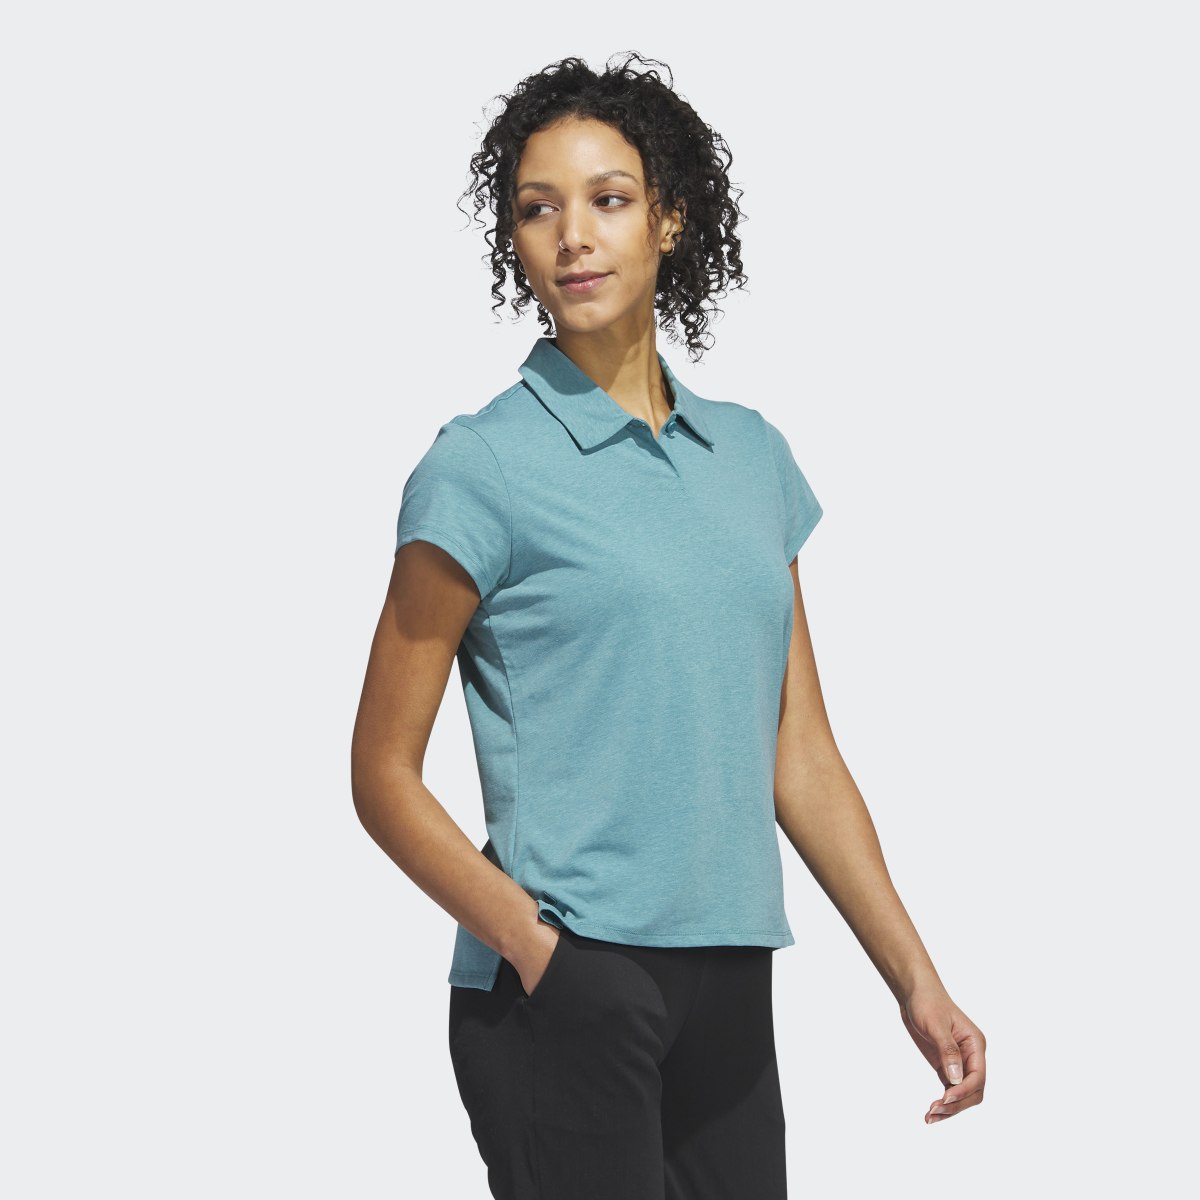 Adidas Go-To Heathered Golf Polo Shirt. 5